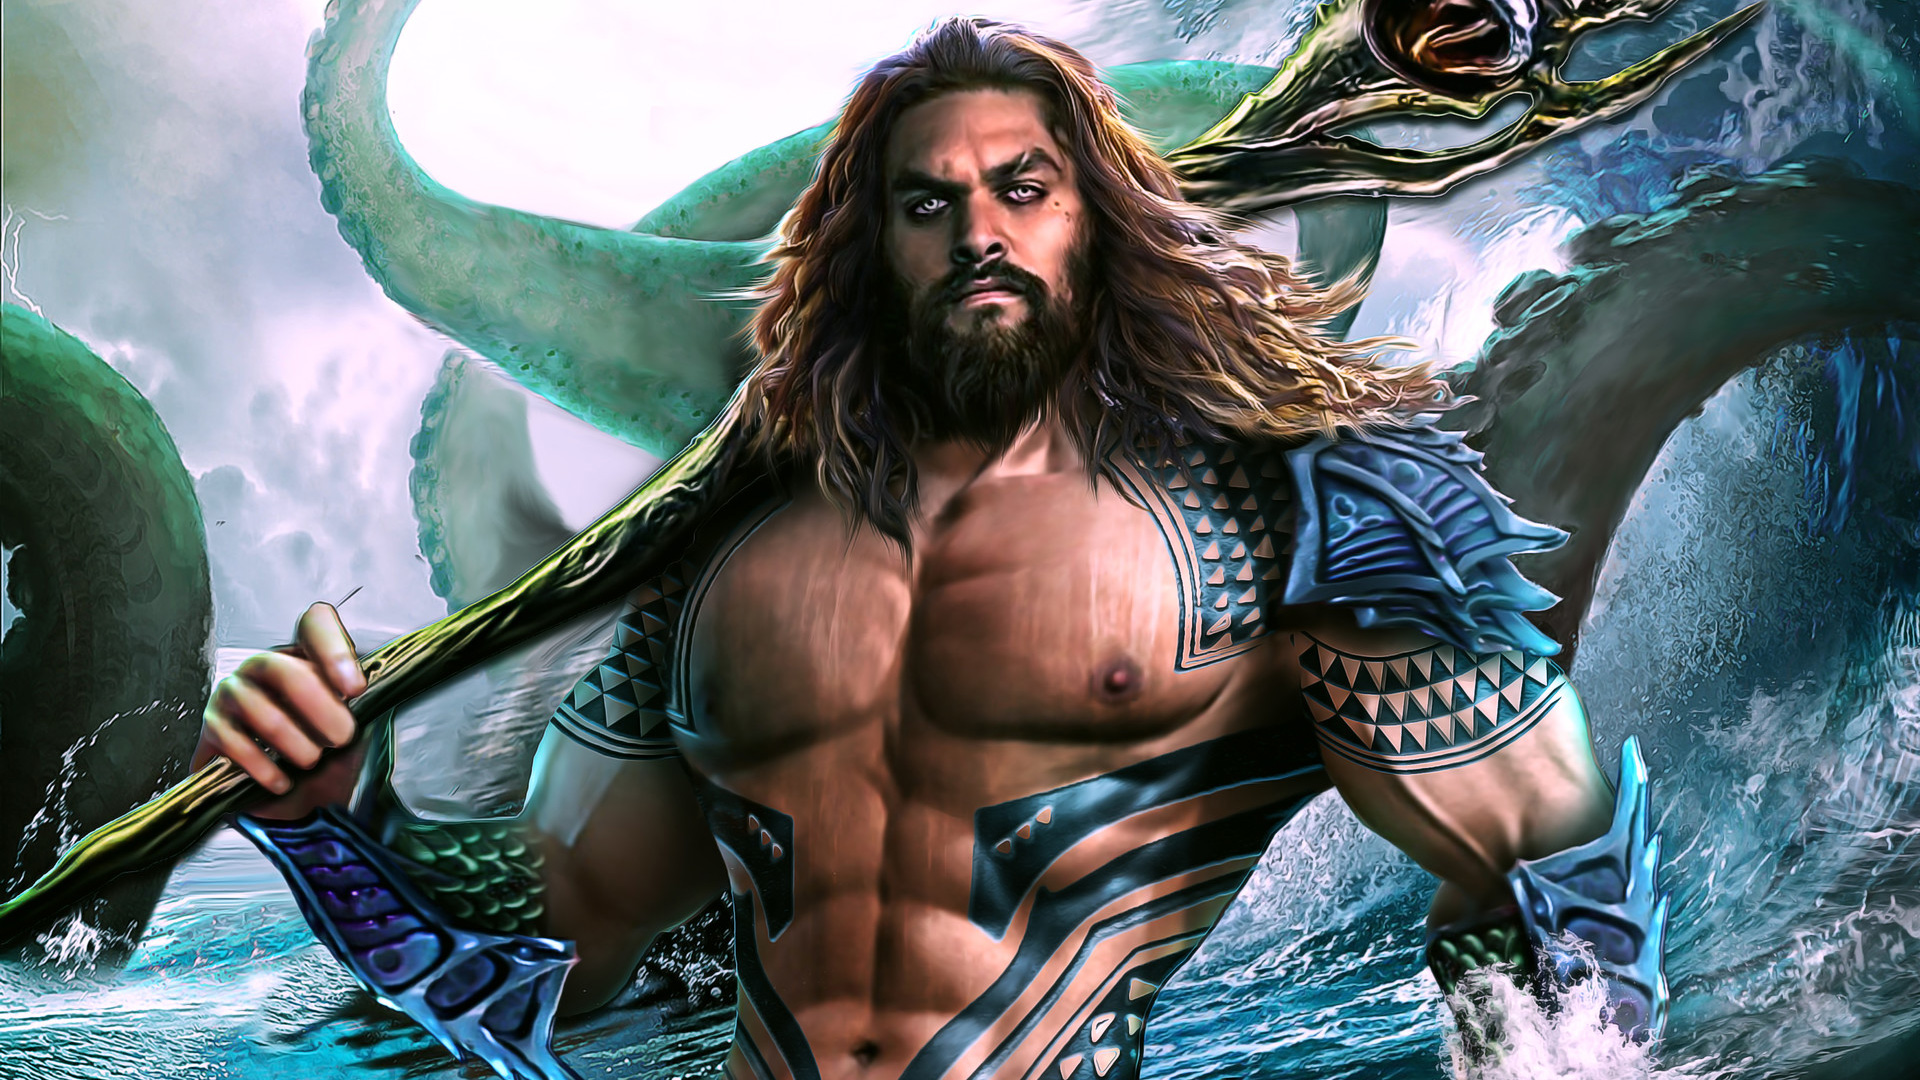 Movie Aquaman HD Wallpaper | Background Image